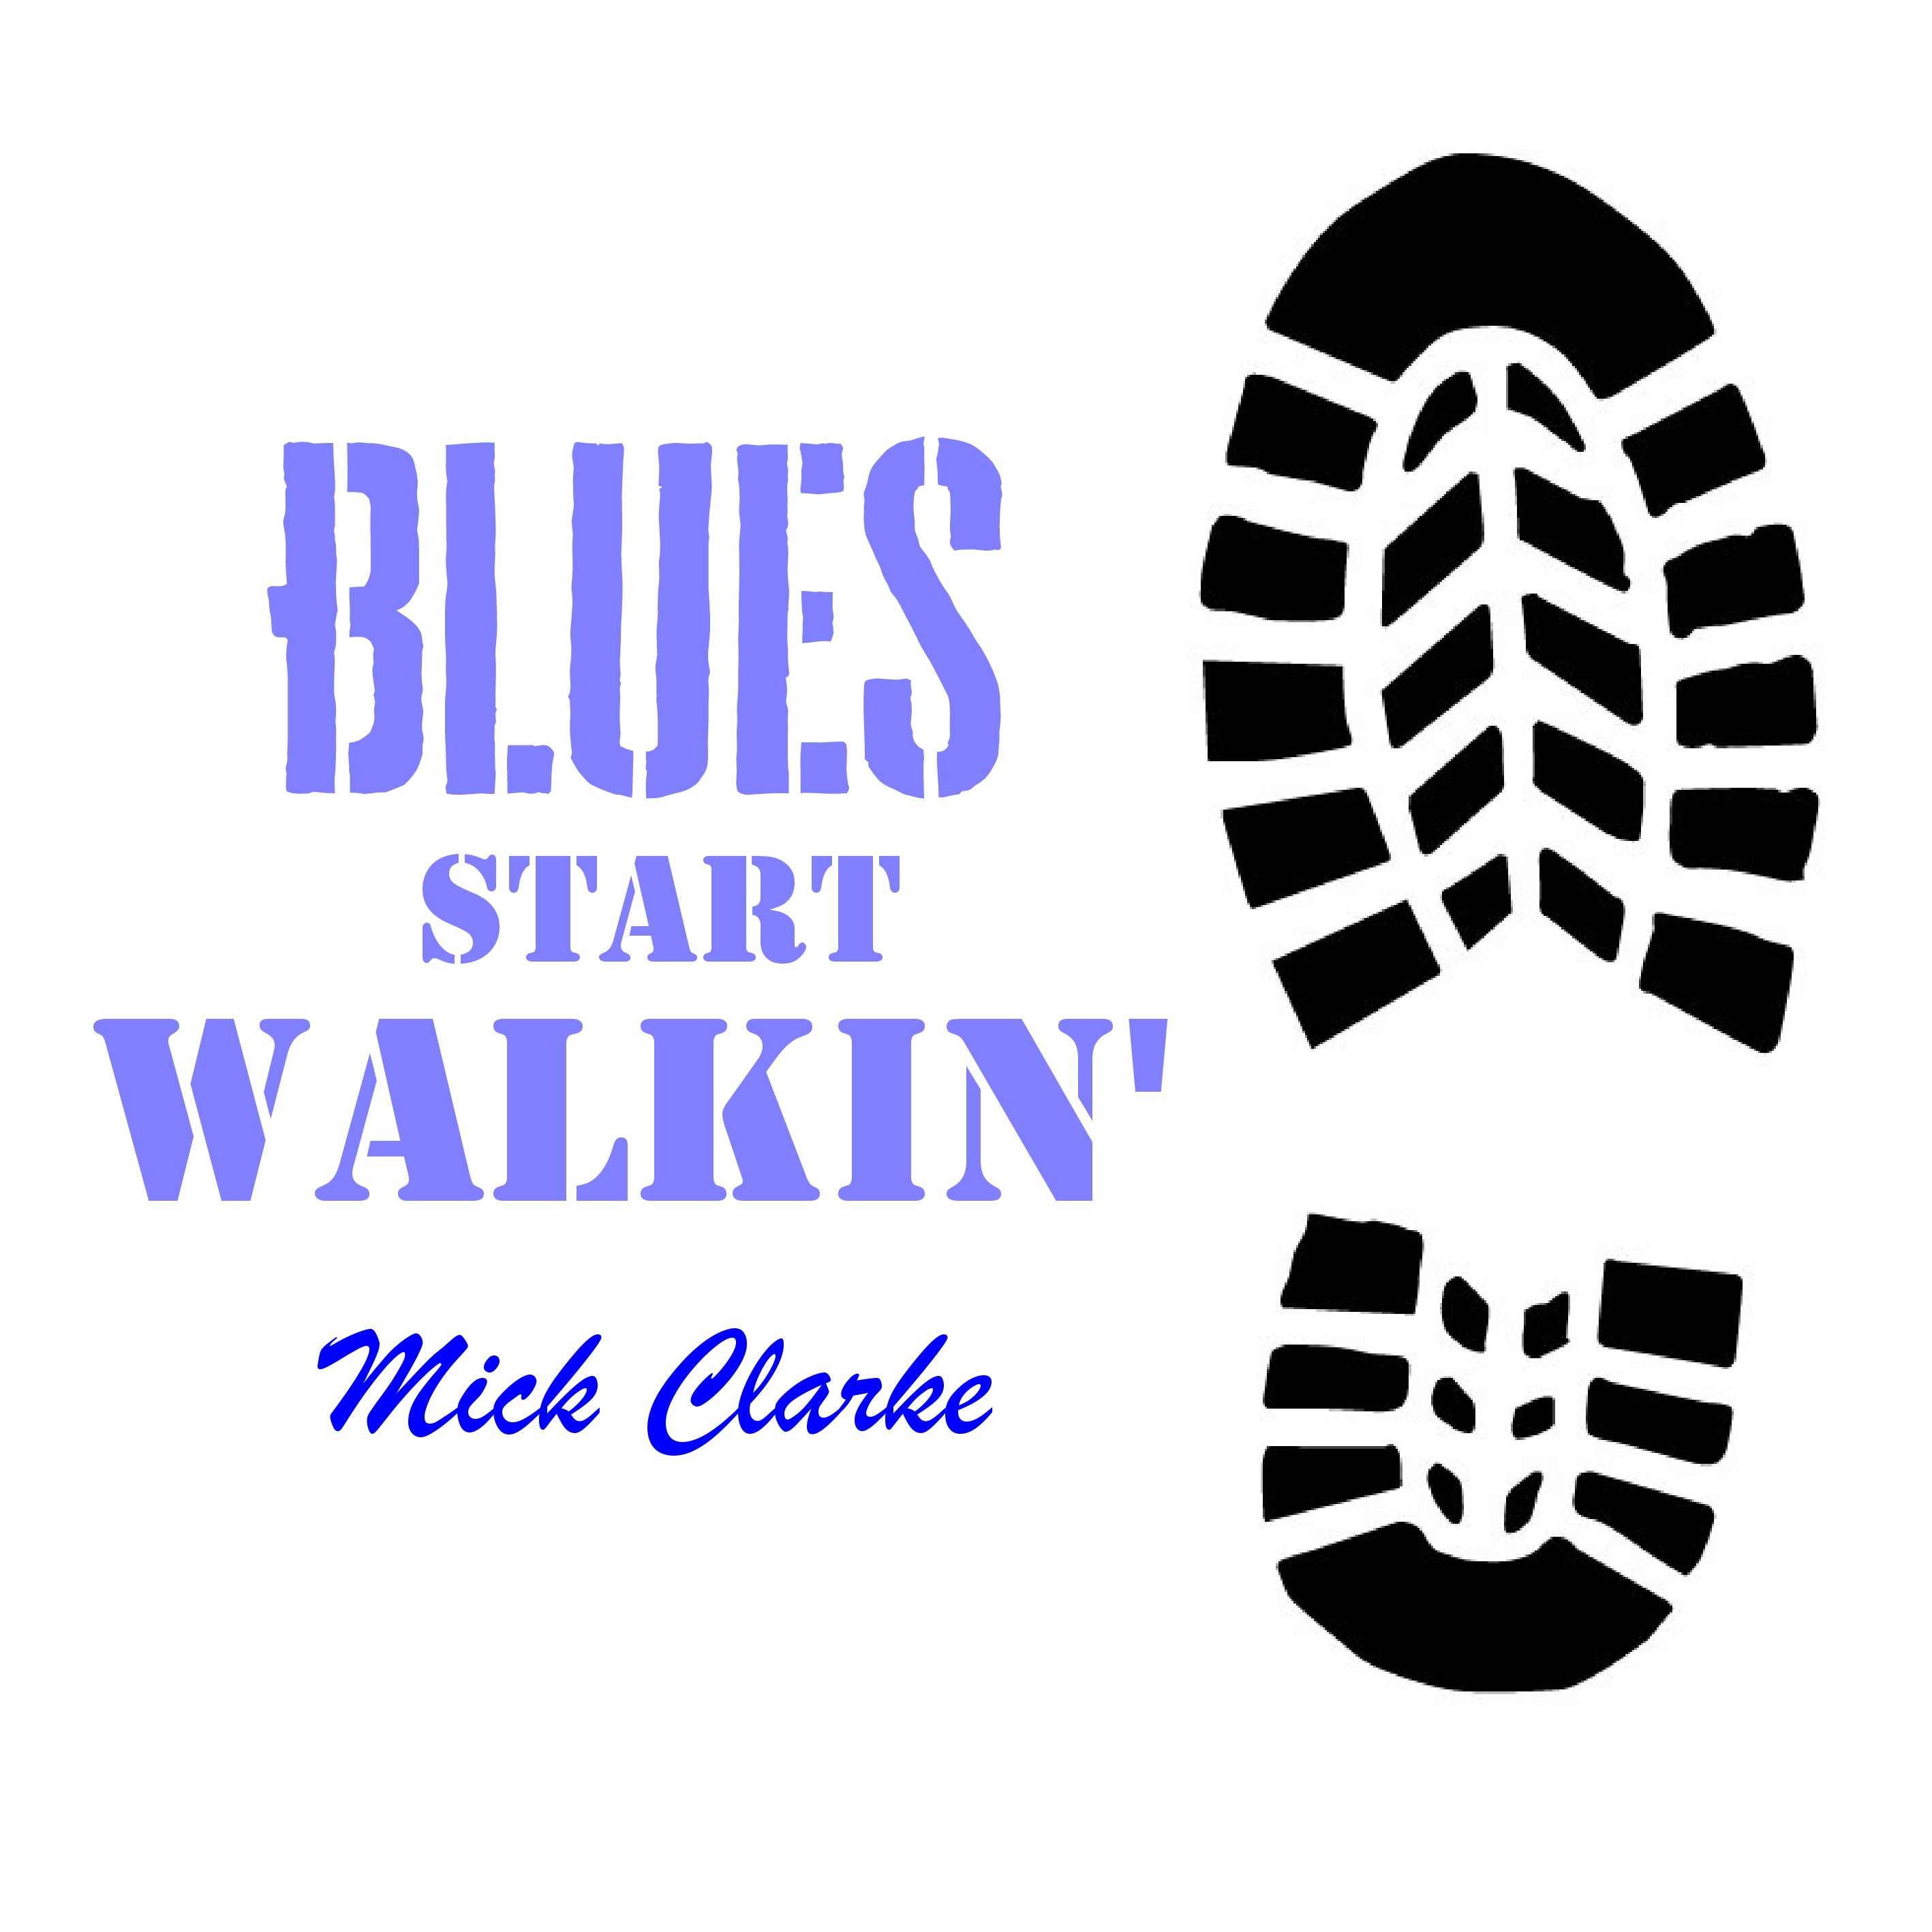 British blues guitarist Mick Clarke